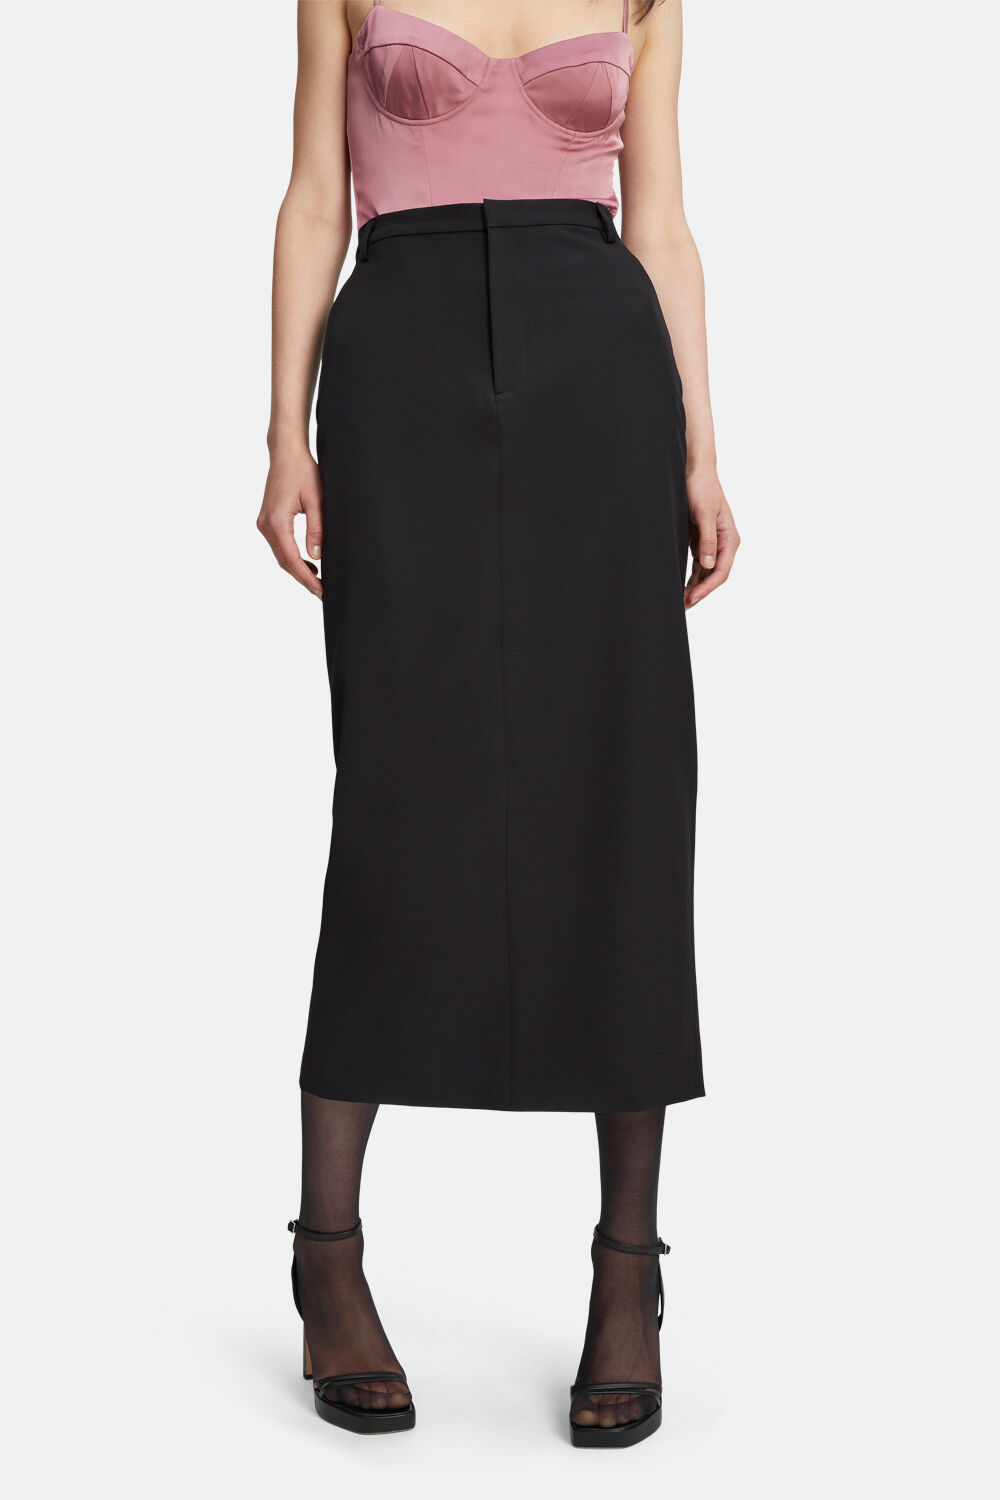 Plus Size LASTINCH Black Wrap Skirt size upto 8XL